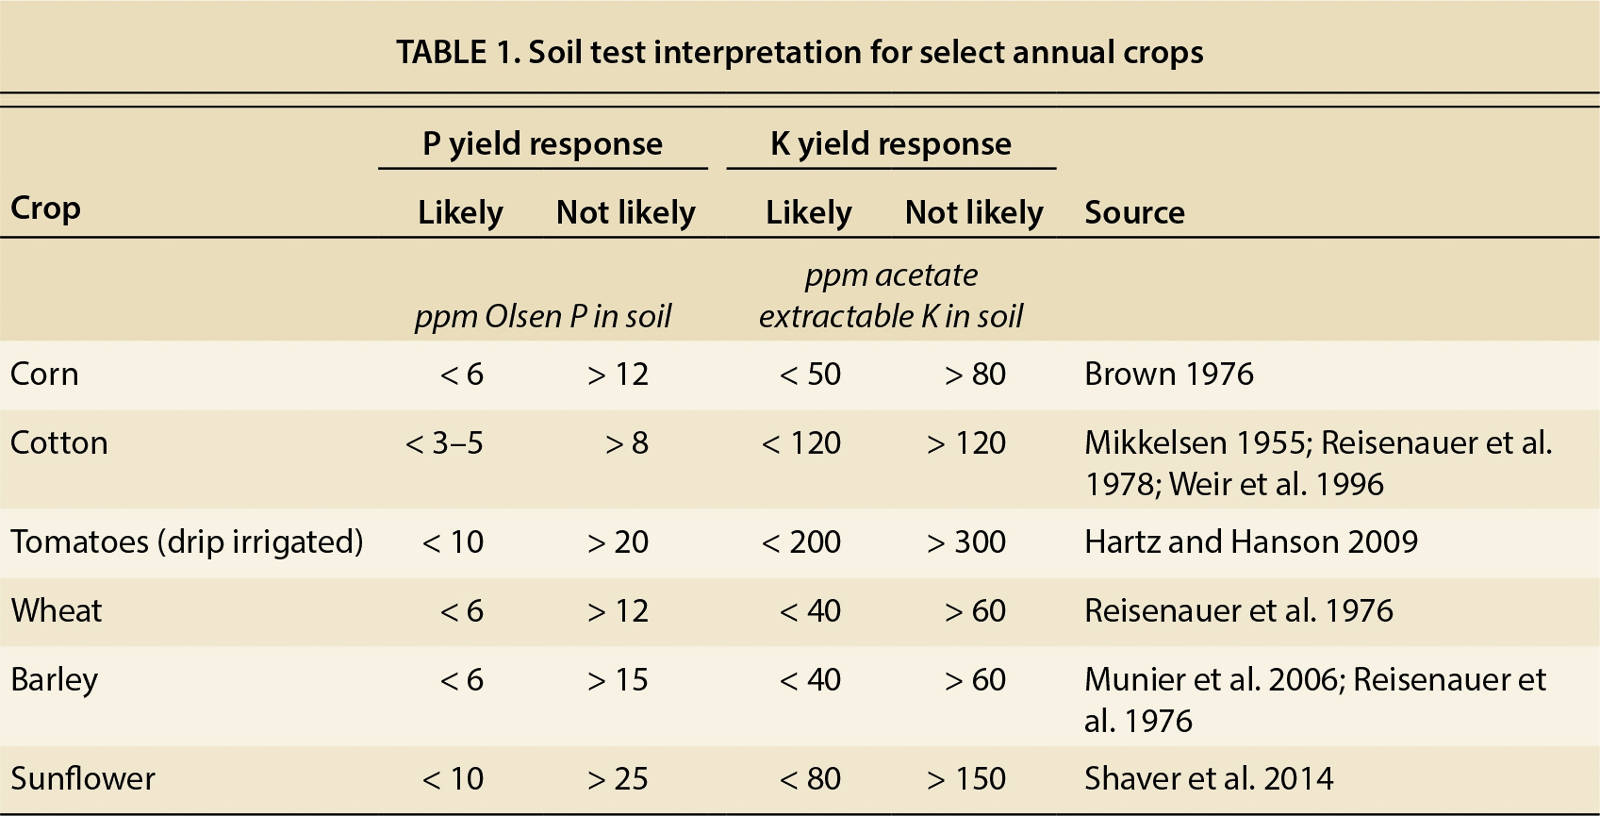 Soil test interpretation for select annual crops